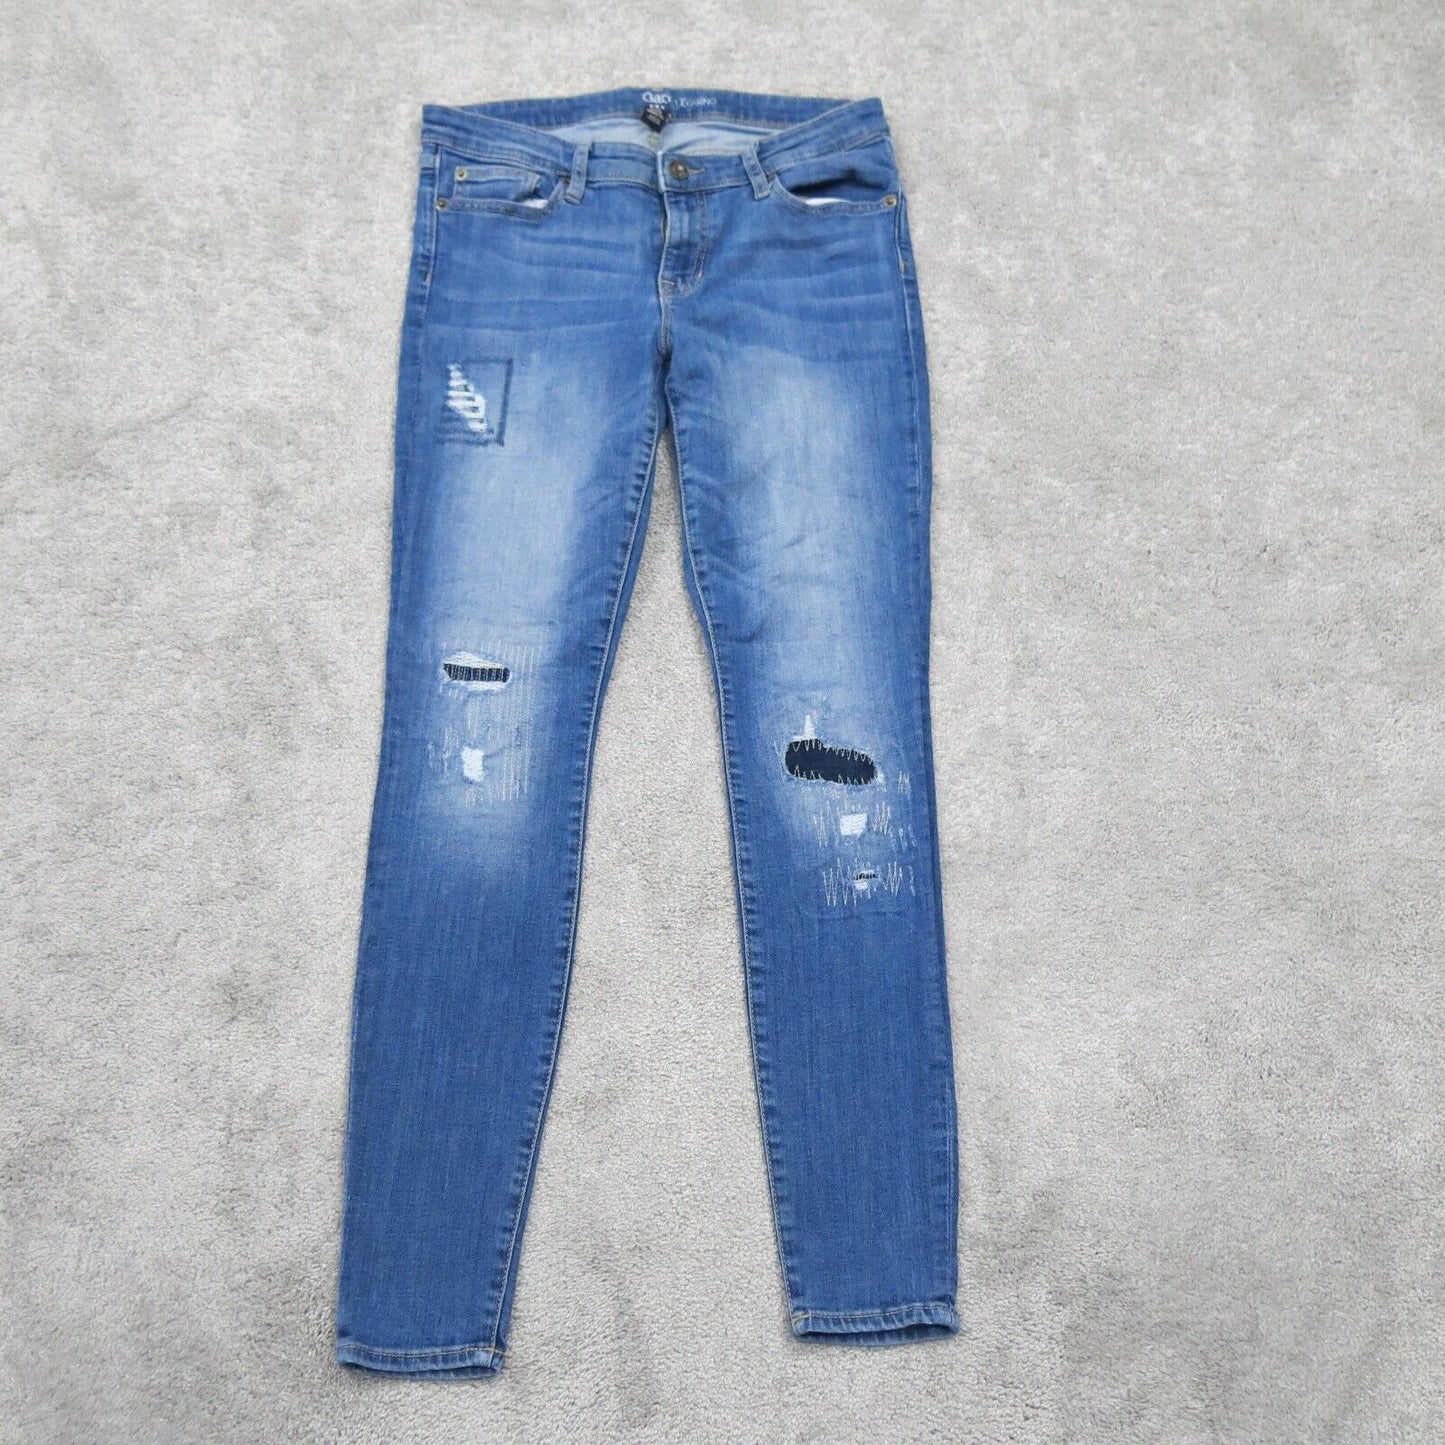 Gap Womens Legging Jeans Denim Stritch Distressed Low Rise Logo Blue Size 4/27